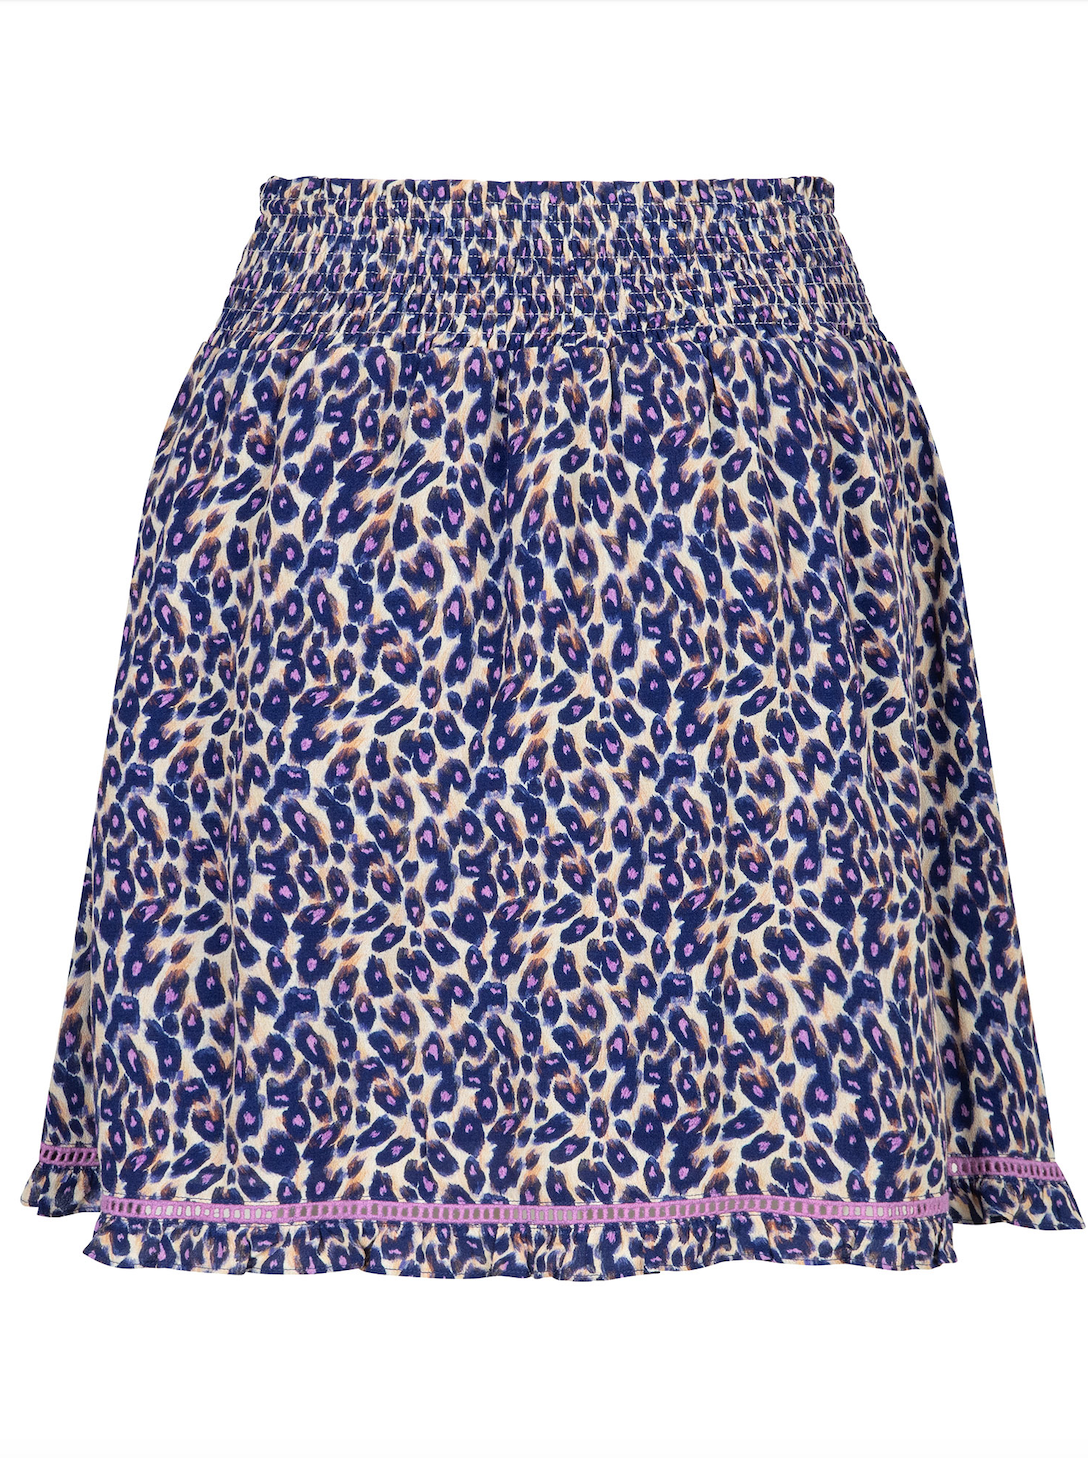 YDENCE YDENCE - Skirt Florentine blue leopard